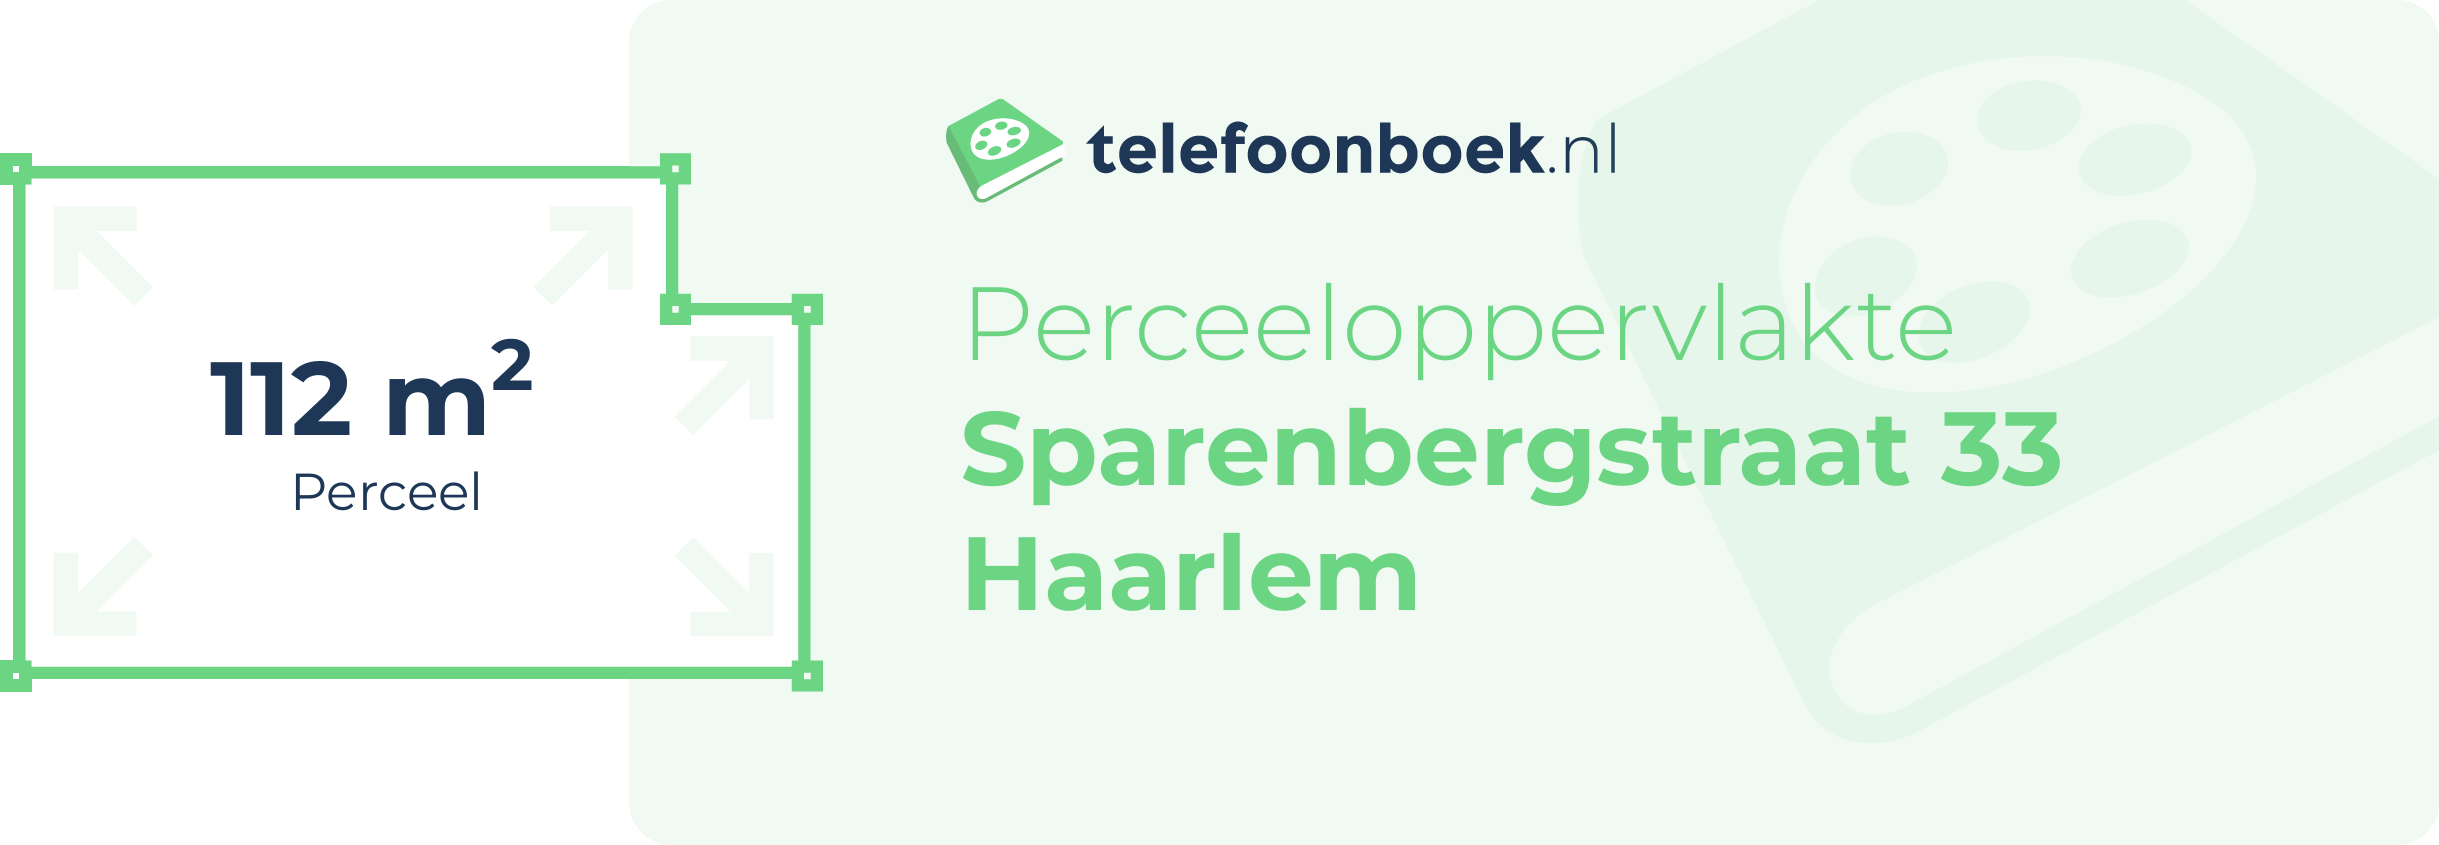 Perceeloppervlakte Sparenbergstraat 33 Haarlem